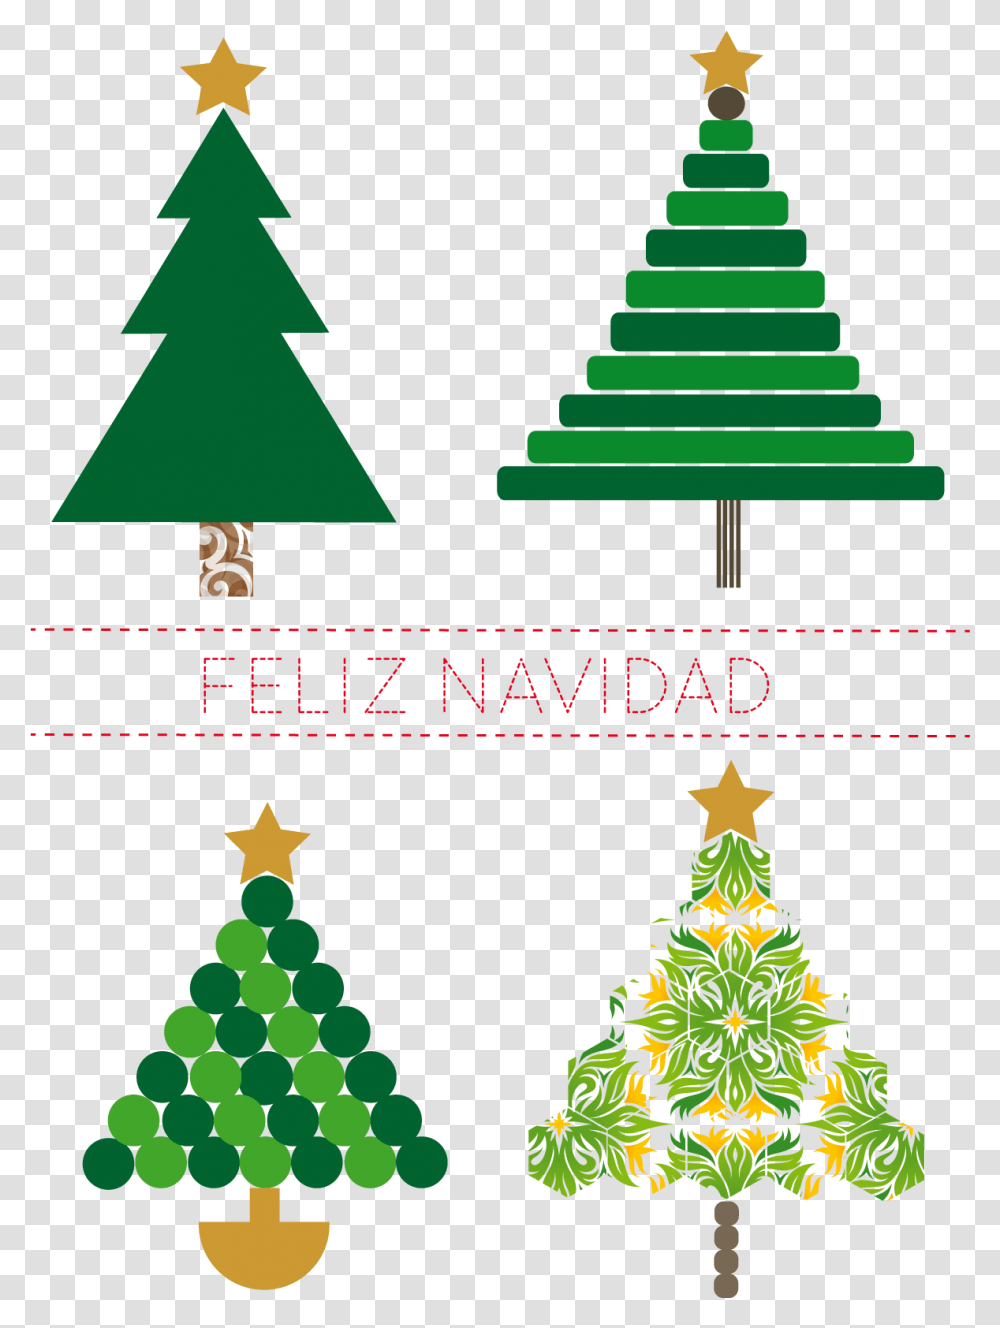 Px Piramide Etaria Do Brasil, Tree, Plant, Ornament, Christmas Tree Transparent Png